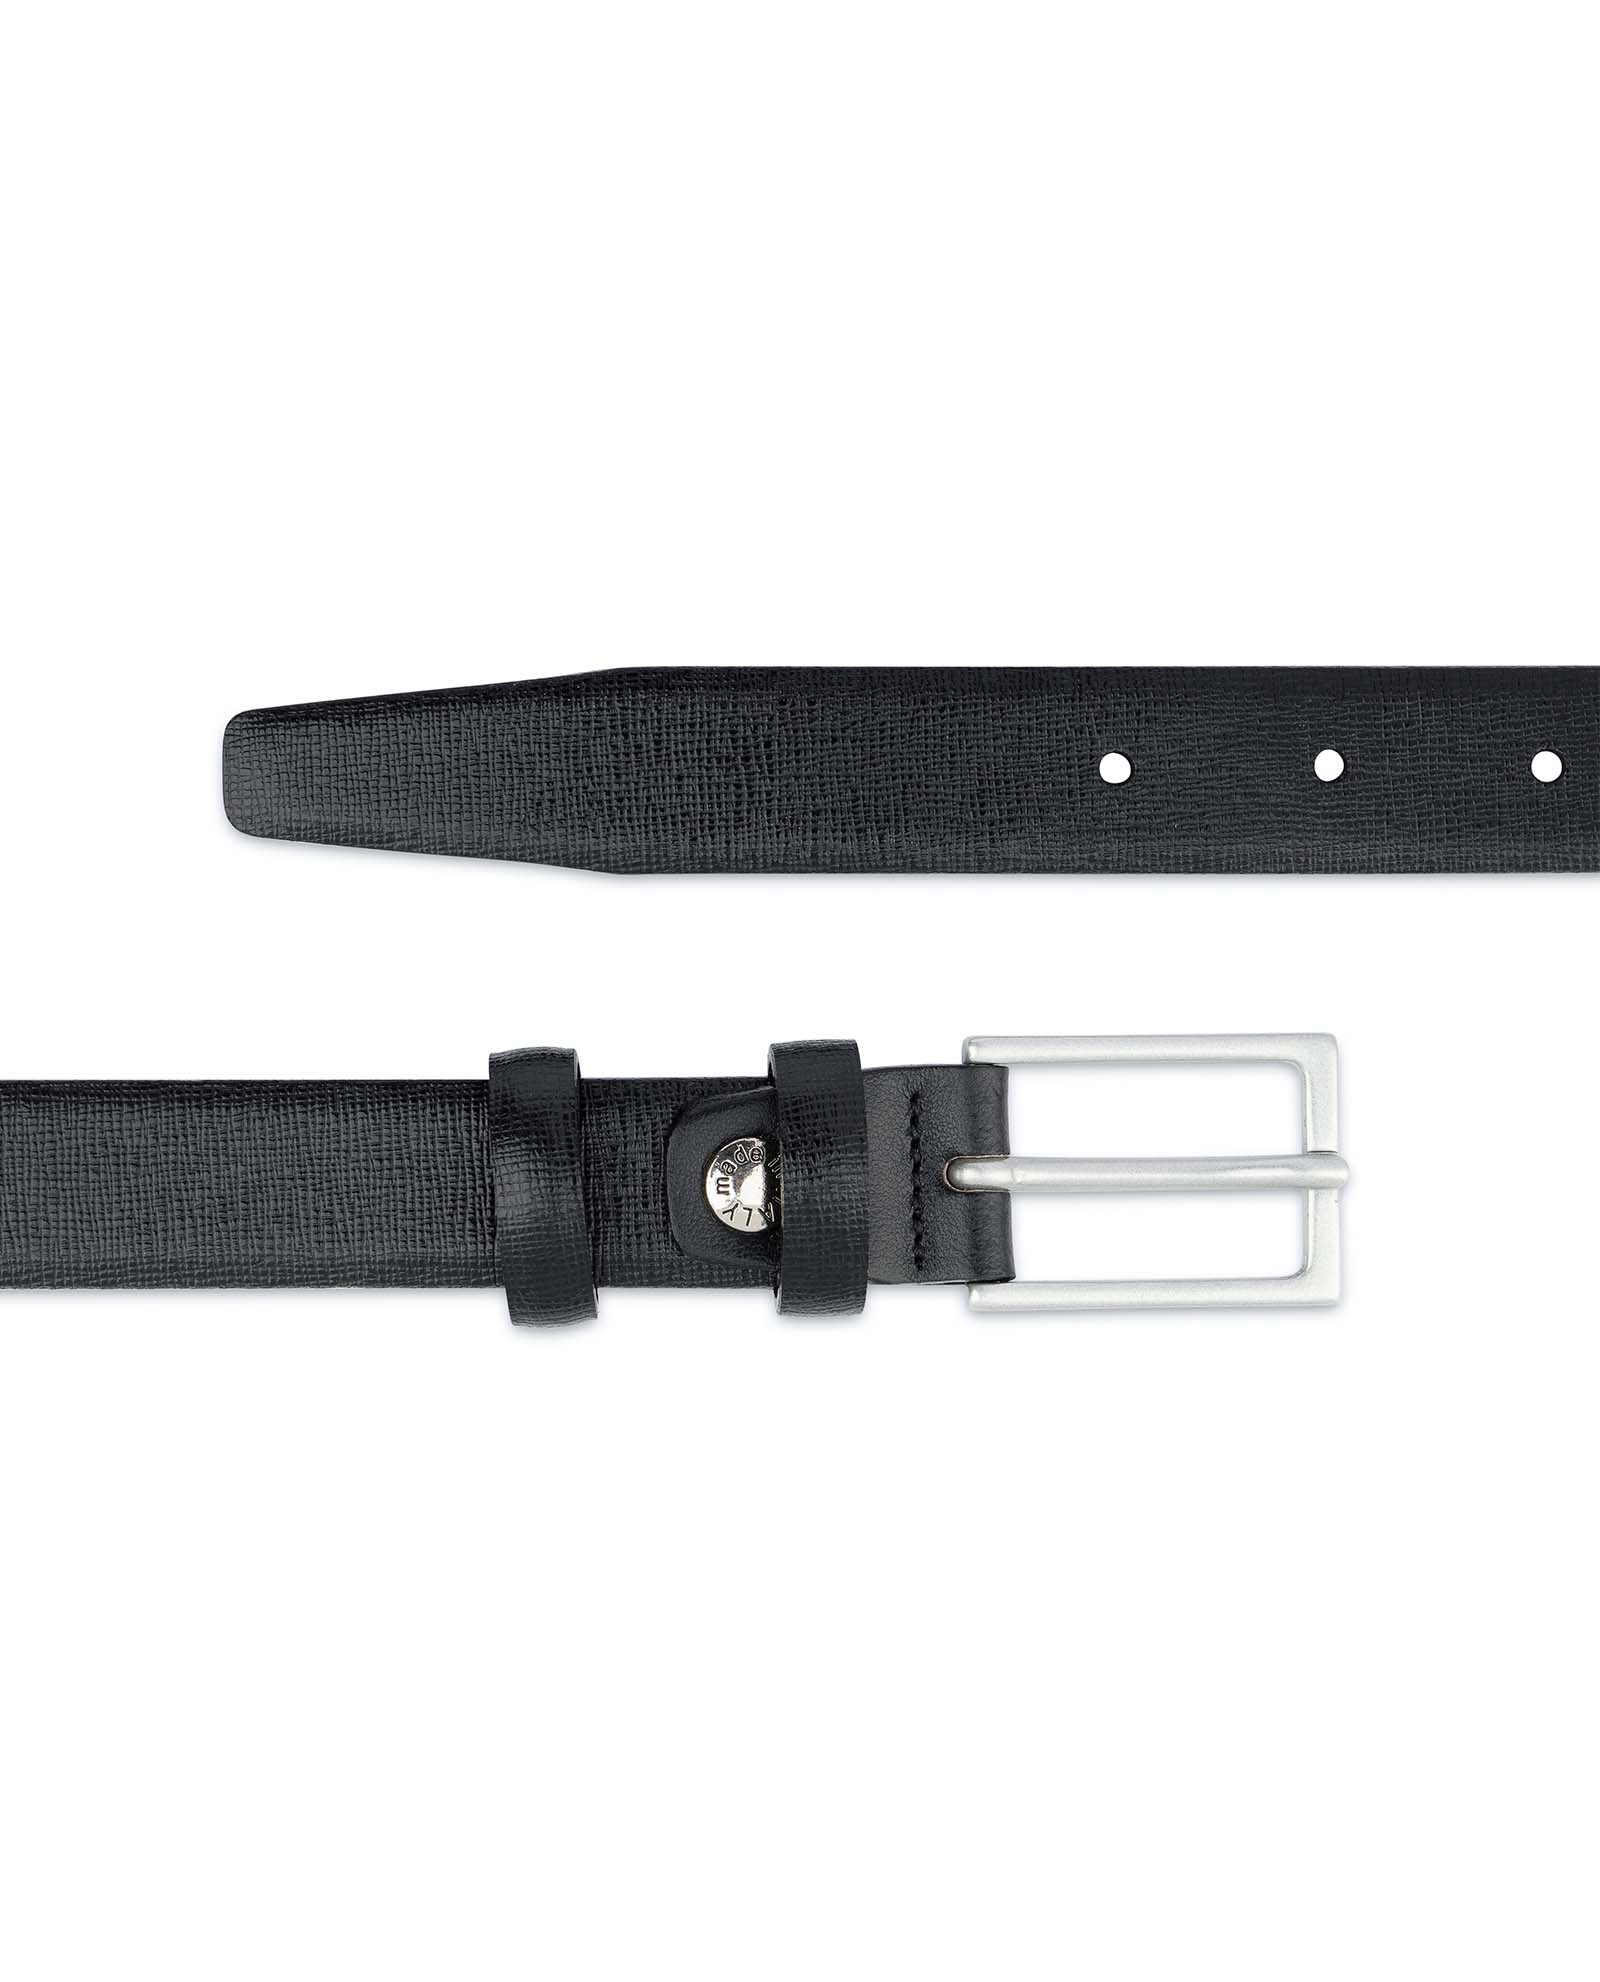 Buy Men's Black Leather Belt | Thin 1 inch | Capo Pelle